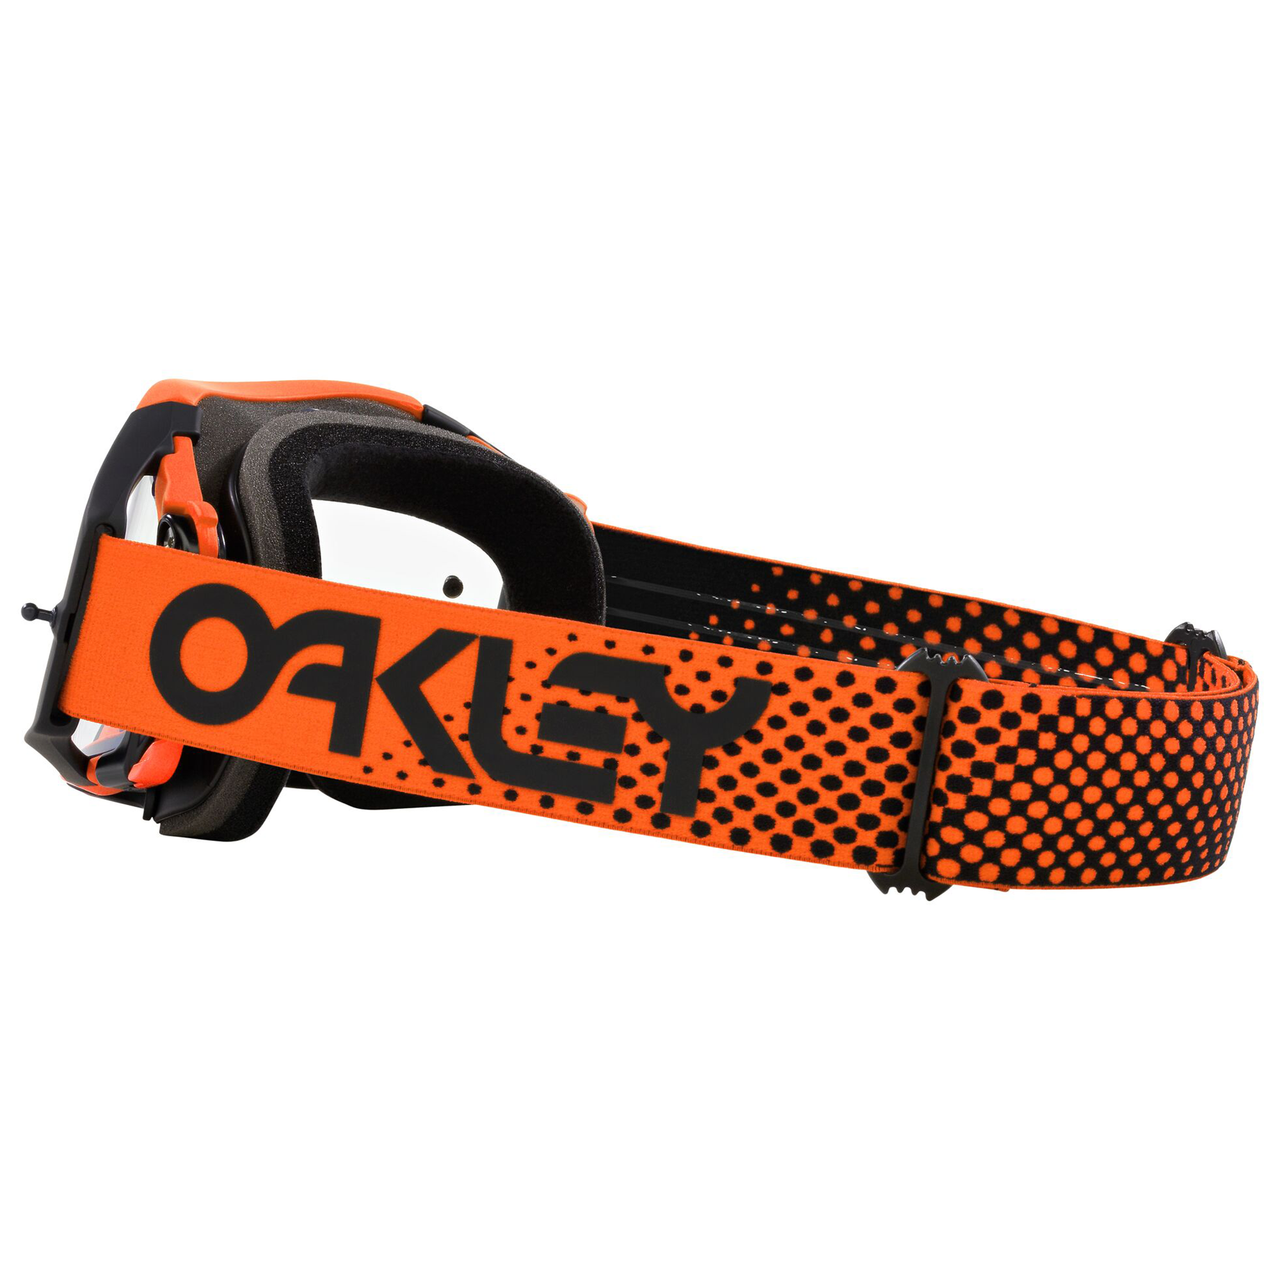 Oakley Airbrake MX Goggle Moto Orange 2 - Clear Lens